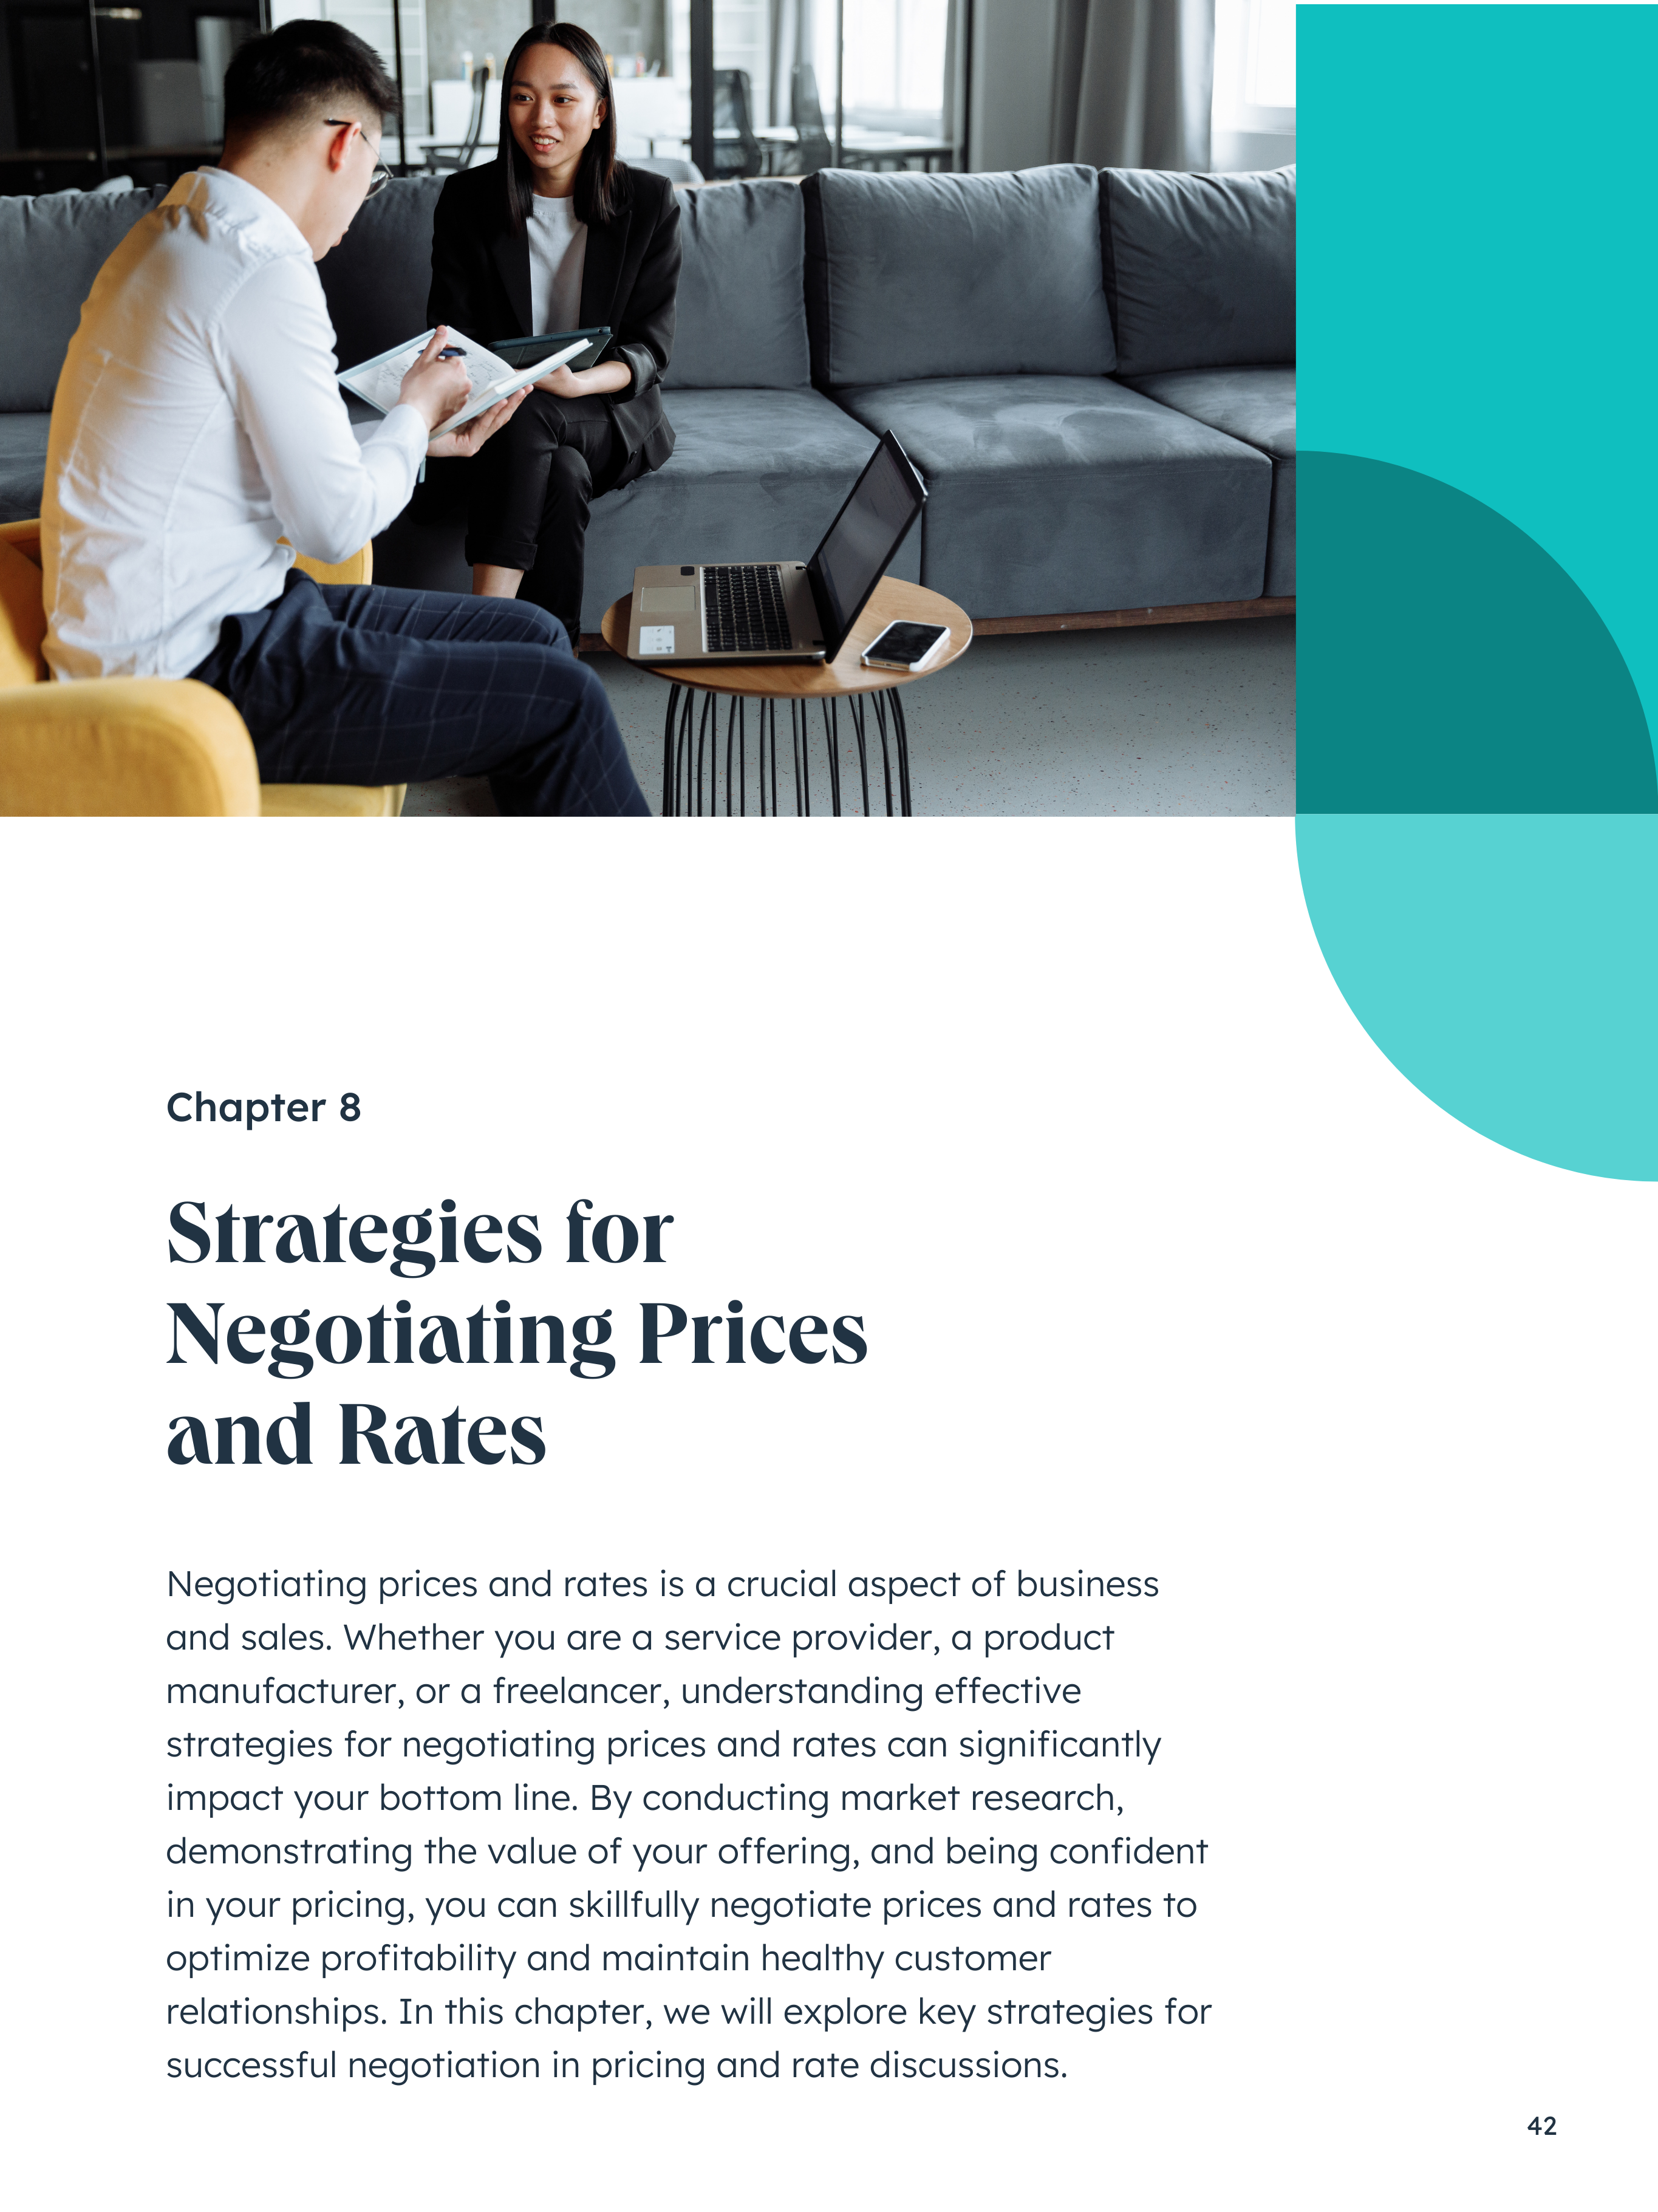 Negotiation Strategies - 4